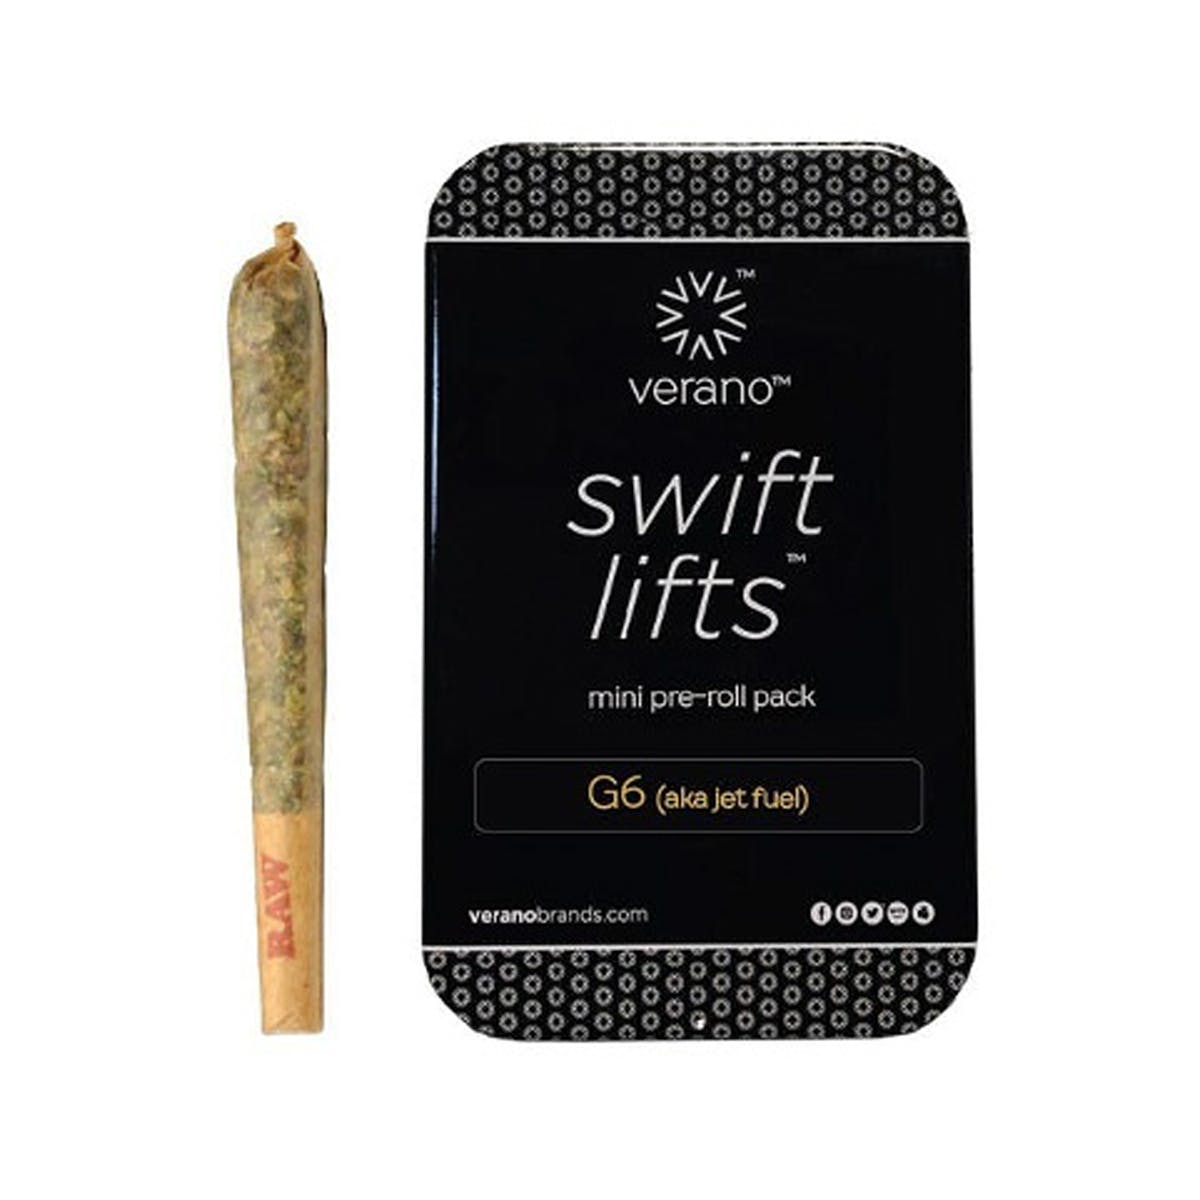 marijuana-dispensaries-starbuds-baltimore-in-baltimore-swift-liftsa-c2-84c-mini-pre-roll-pack-g6-jet-fuel